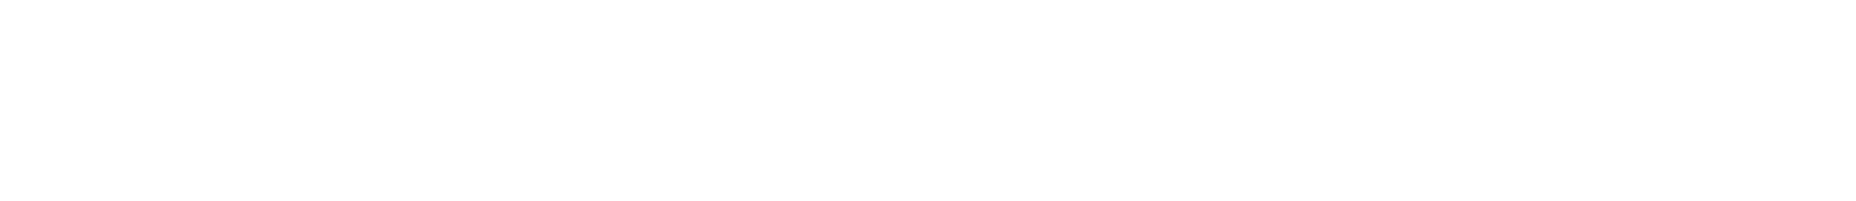 Interlocking OU, School of Community Medicine, Departments and Residency Programs, The University of Oklahoma - Tulsa website wordmark.